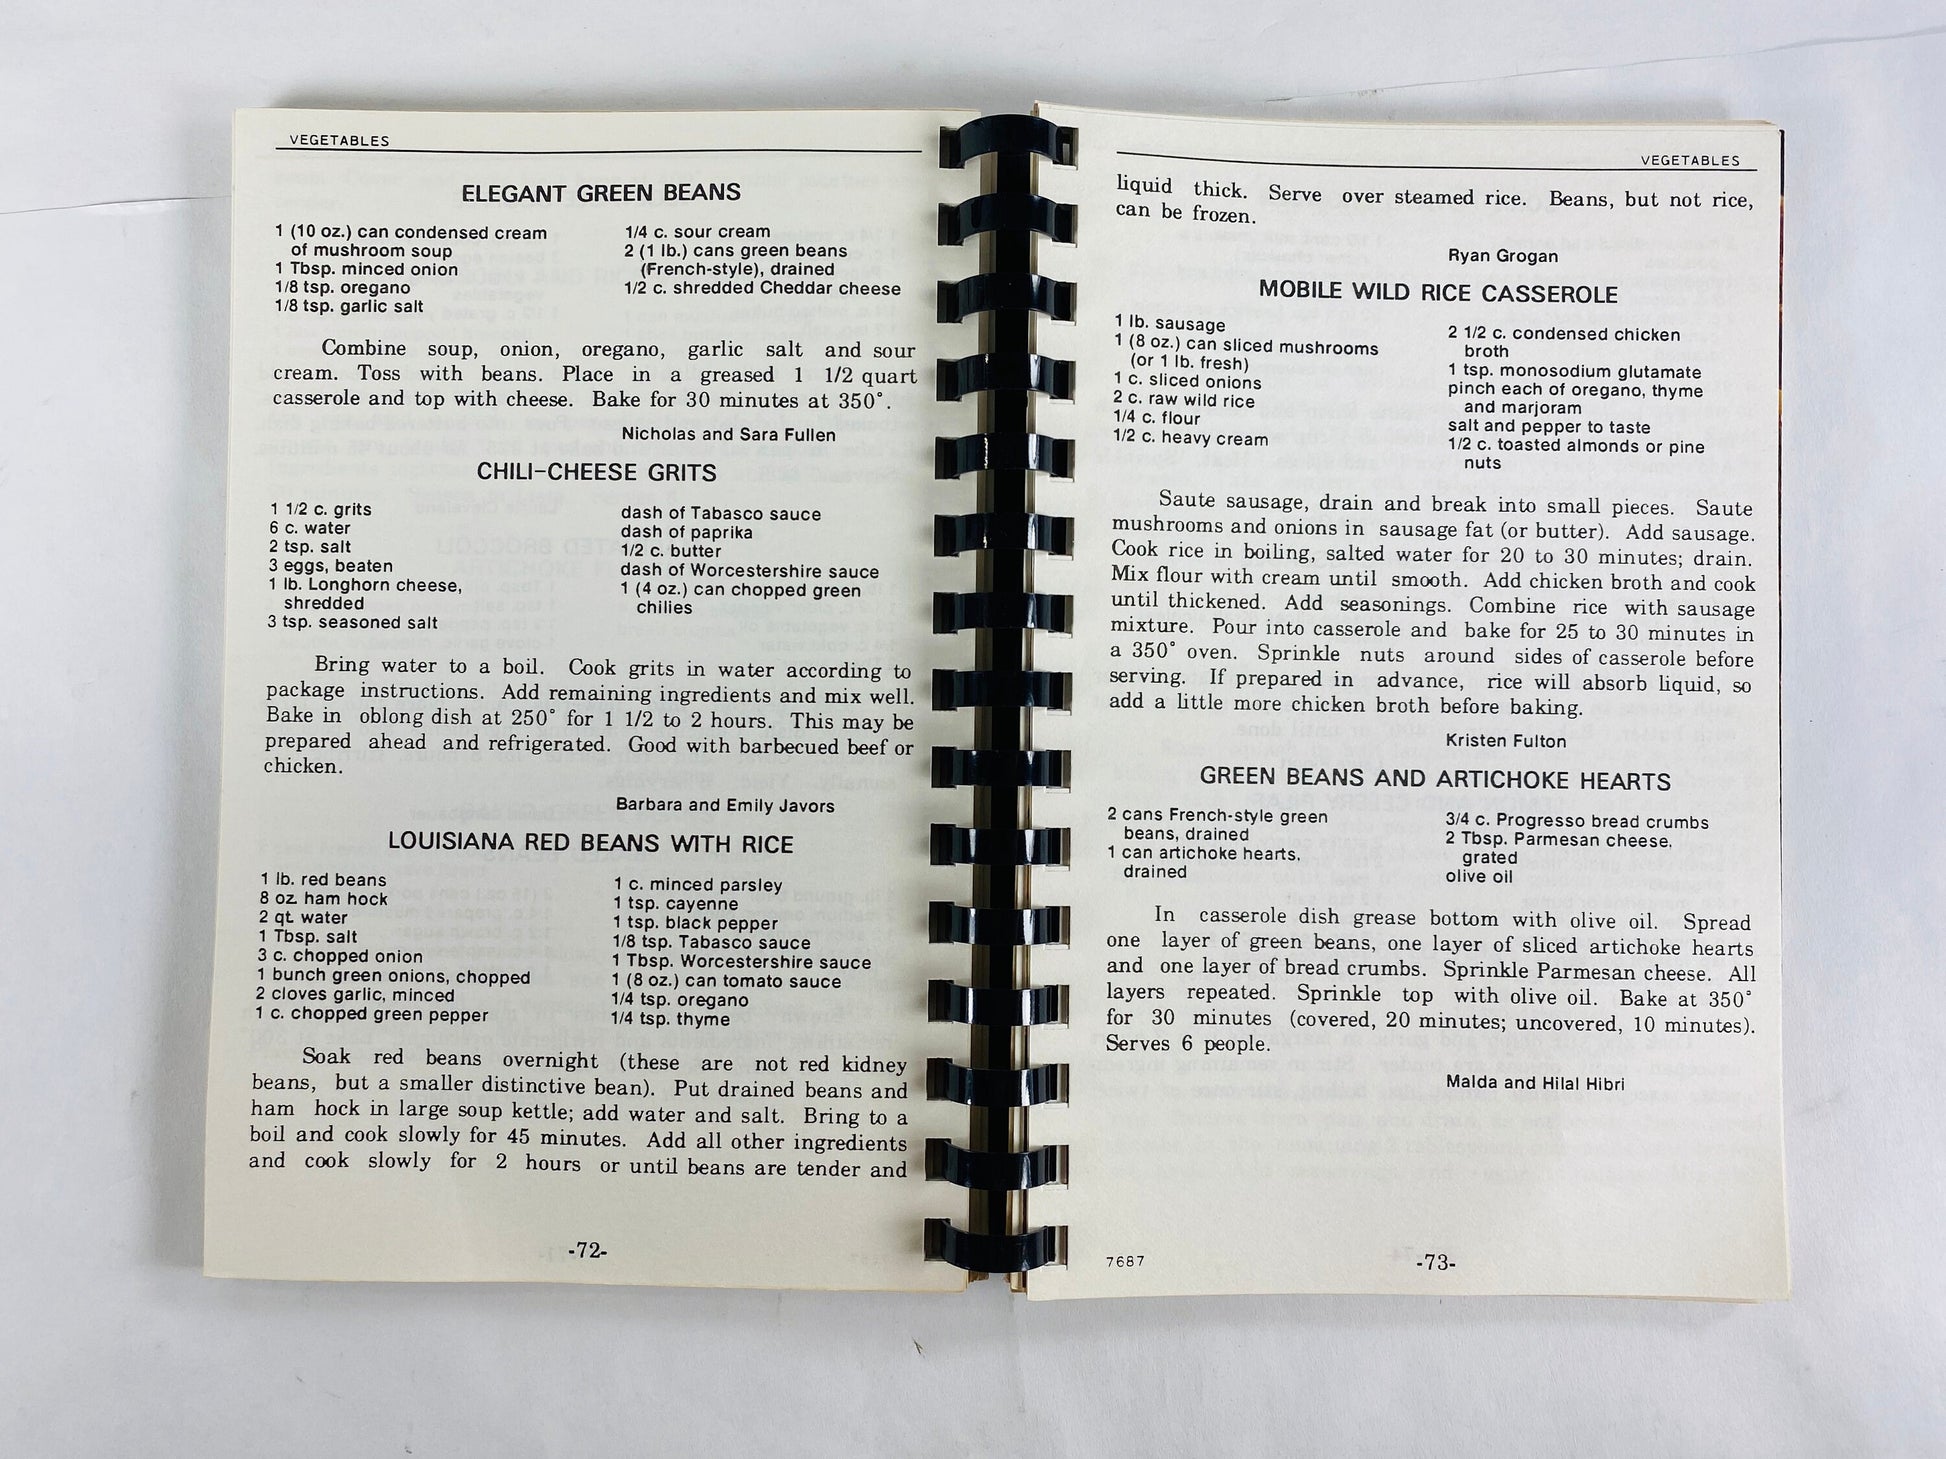 Fire Up for Cooking! Vintage St George Episcopal School Cookbook circa 1987. Dill dip, Ninfa's Green Sauce, Shrimp Dip, Missouri Pate,